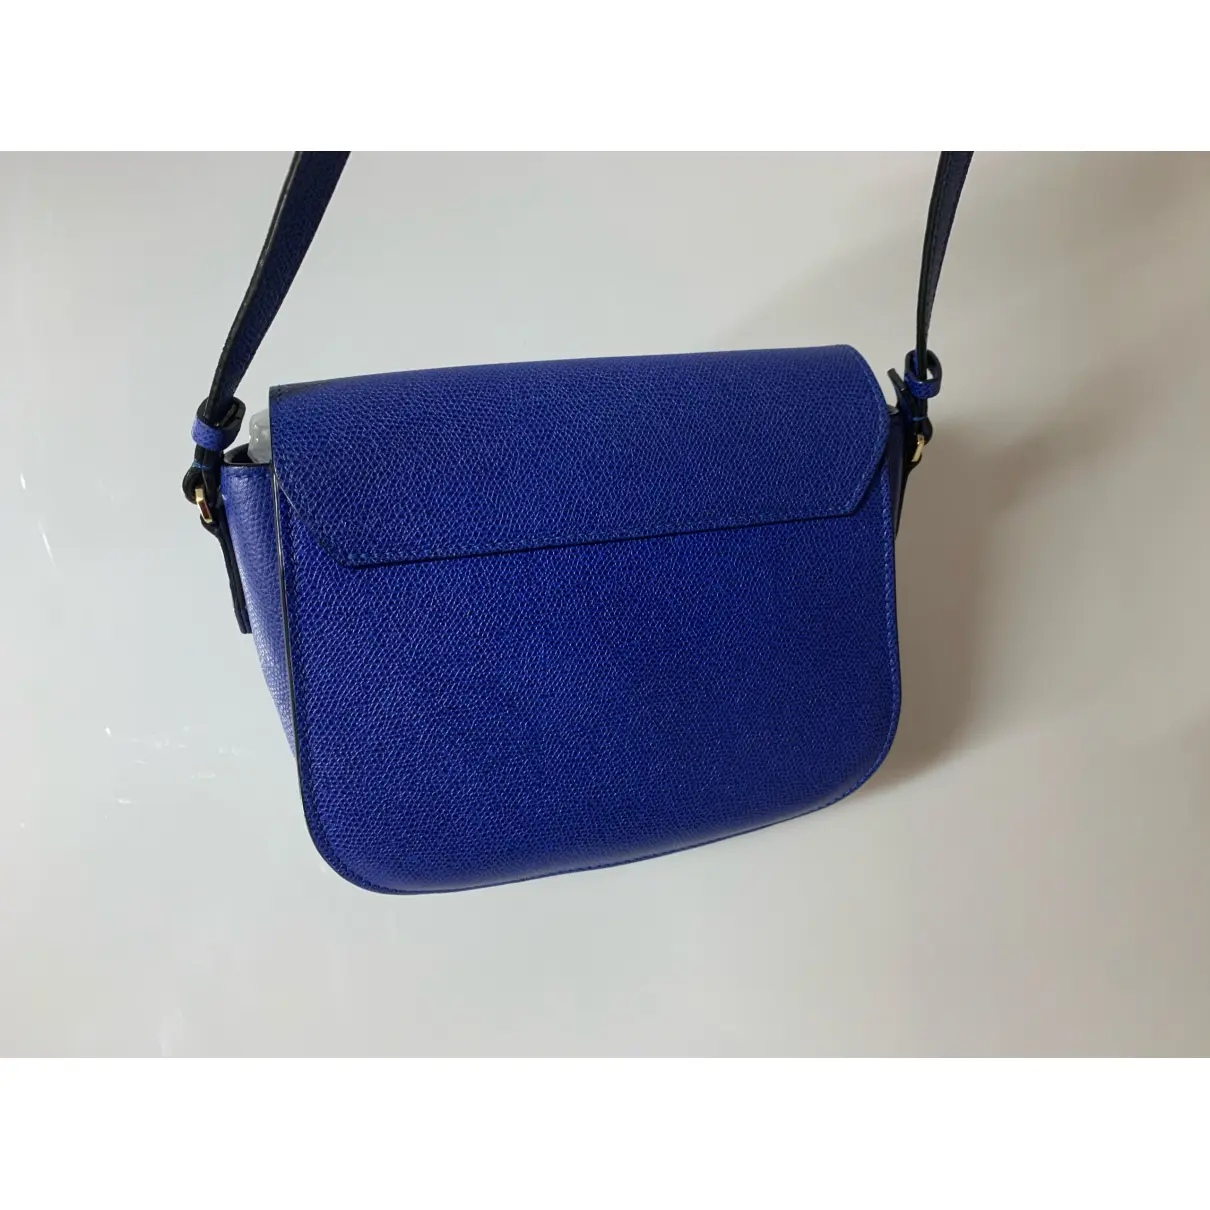 Buy Valextra Iside leather handbag online